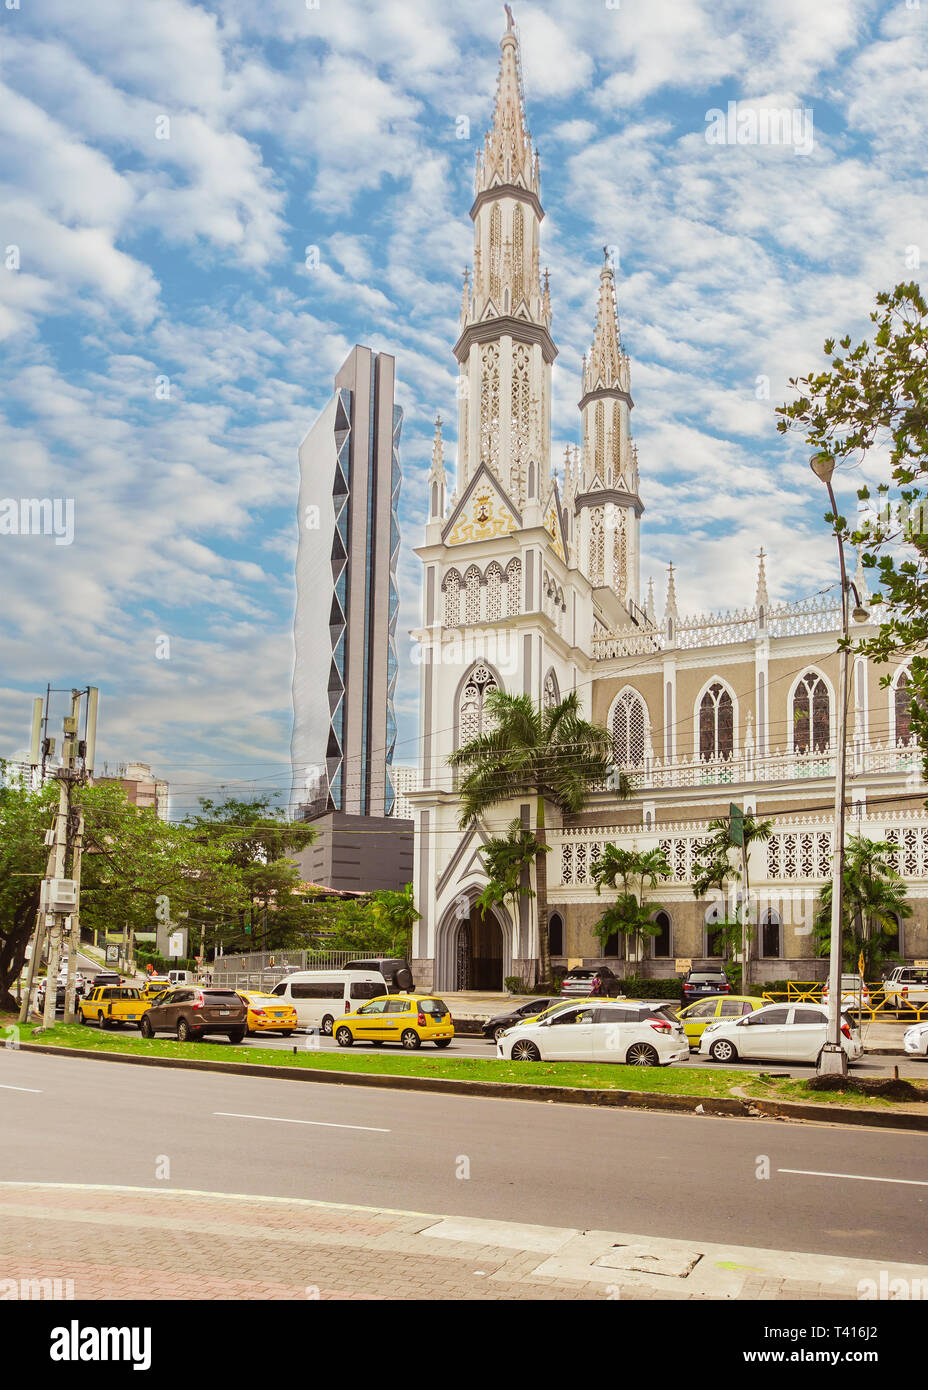 The church 'Iglesia del Carmen' in Panama City Stock Photo